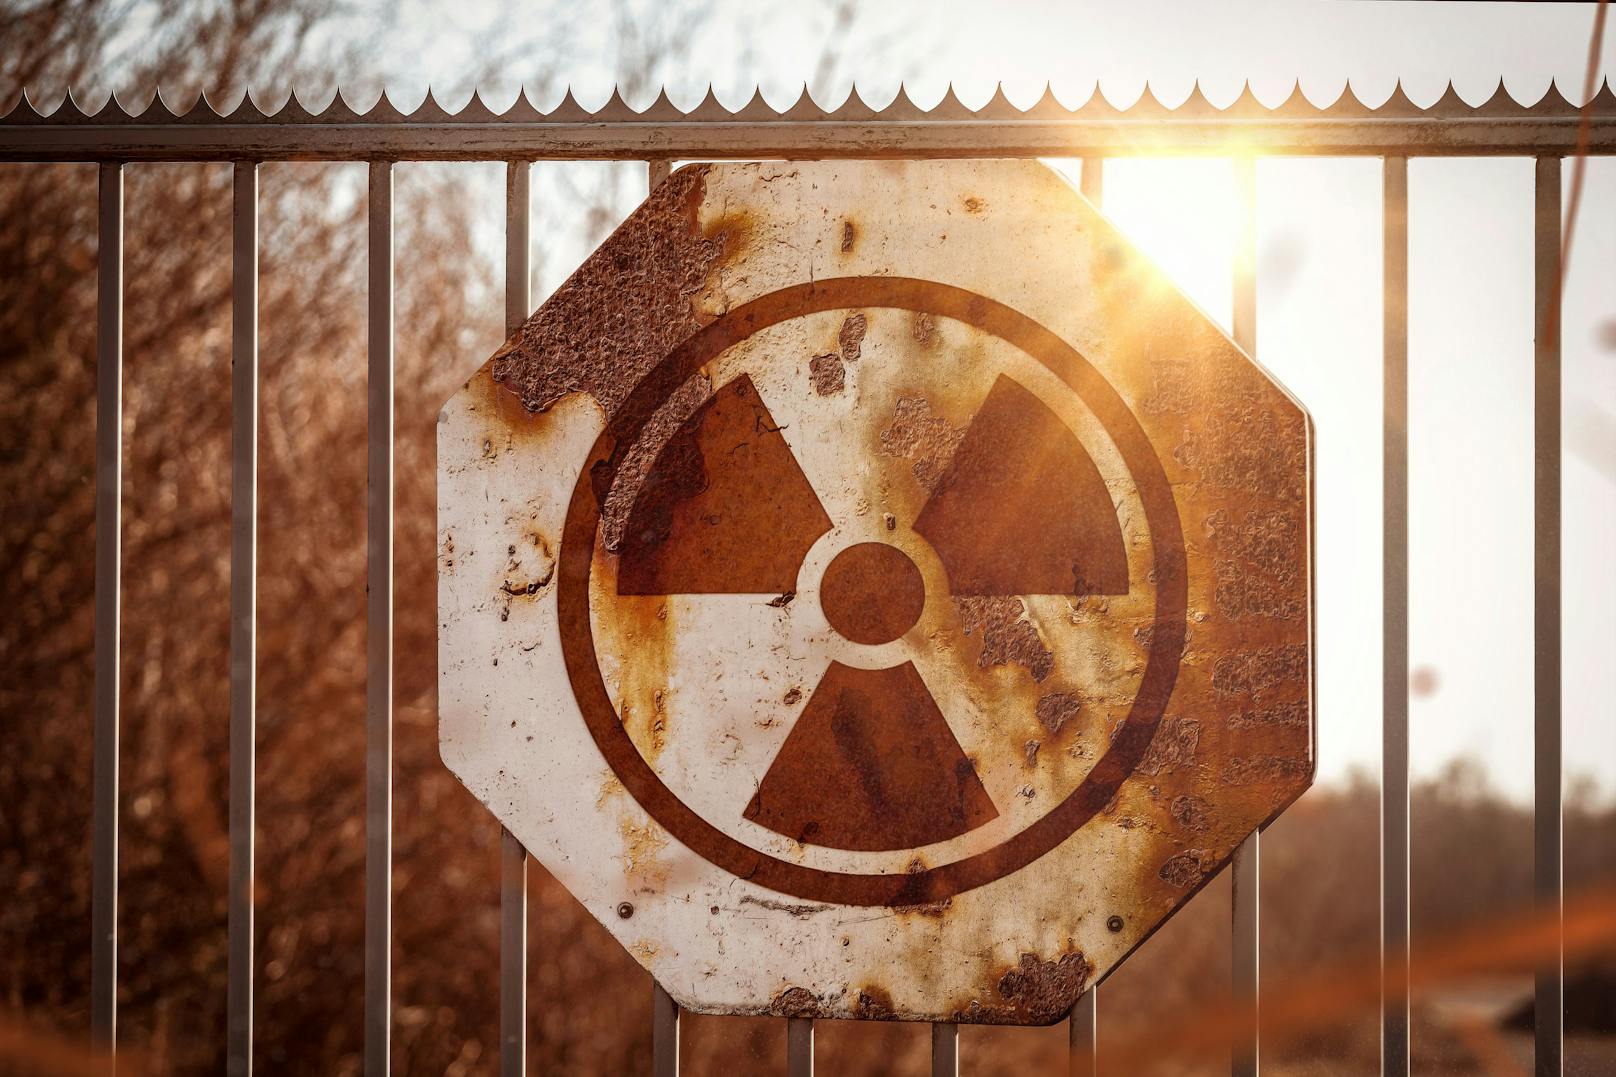 2,5 Tonnen Uran in Libyen vermisst – Behörde alarmiert